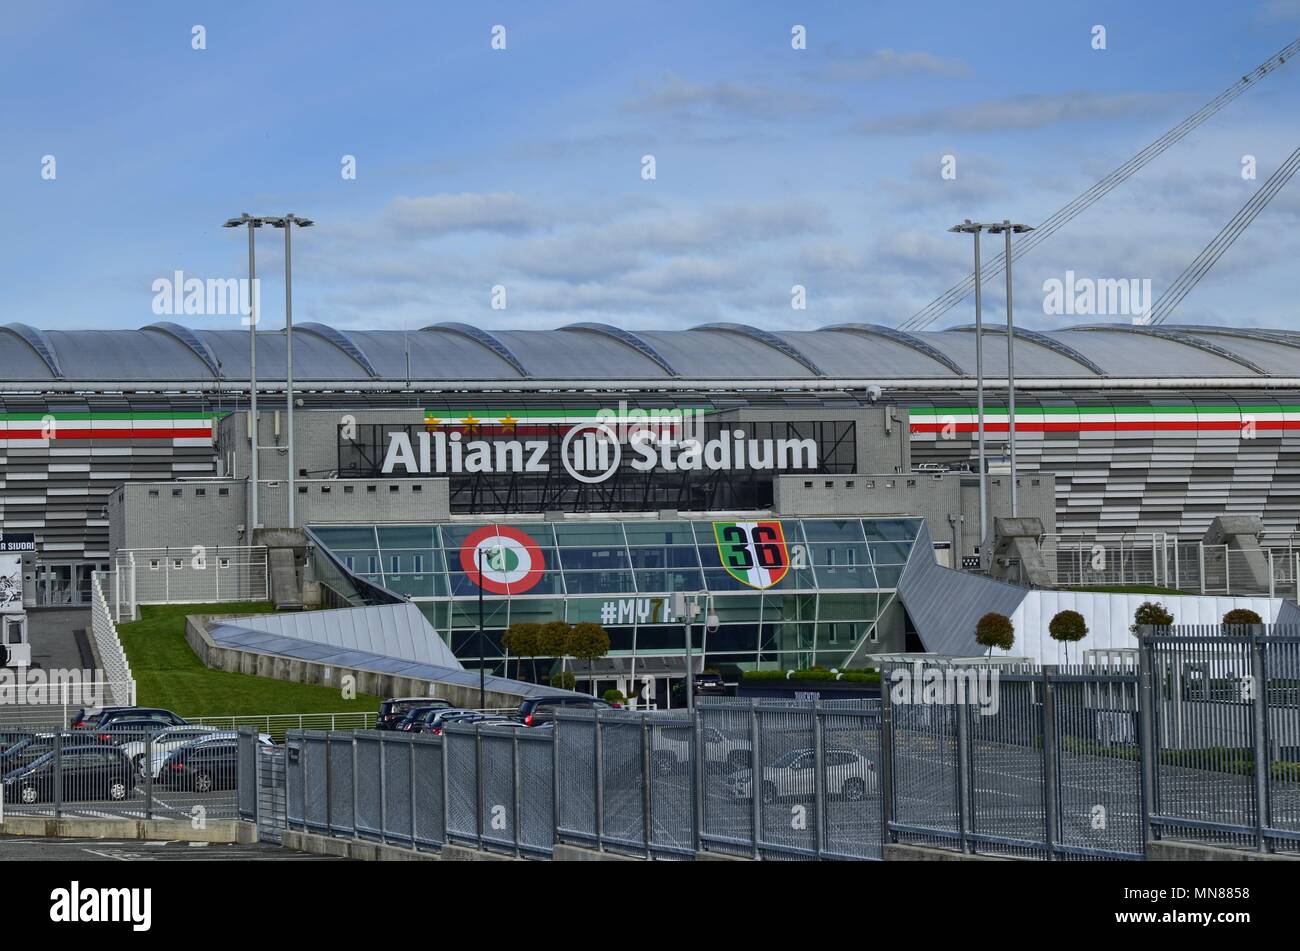 Allianz Stadium New Name Of The Old Juventus Stadium The